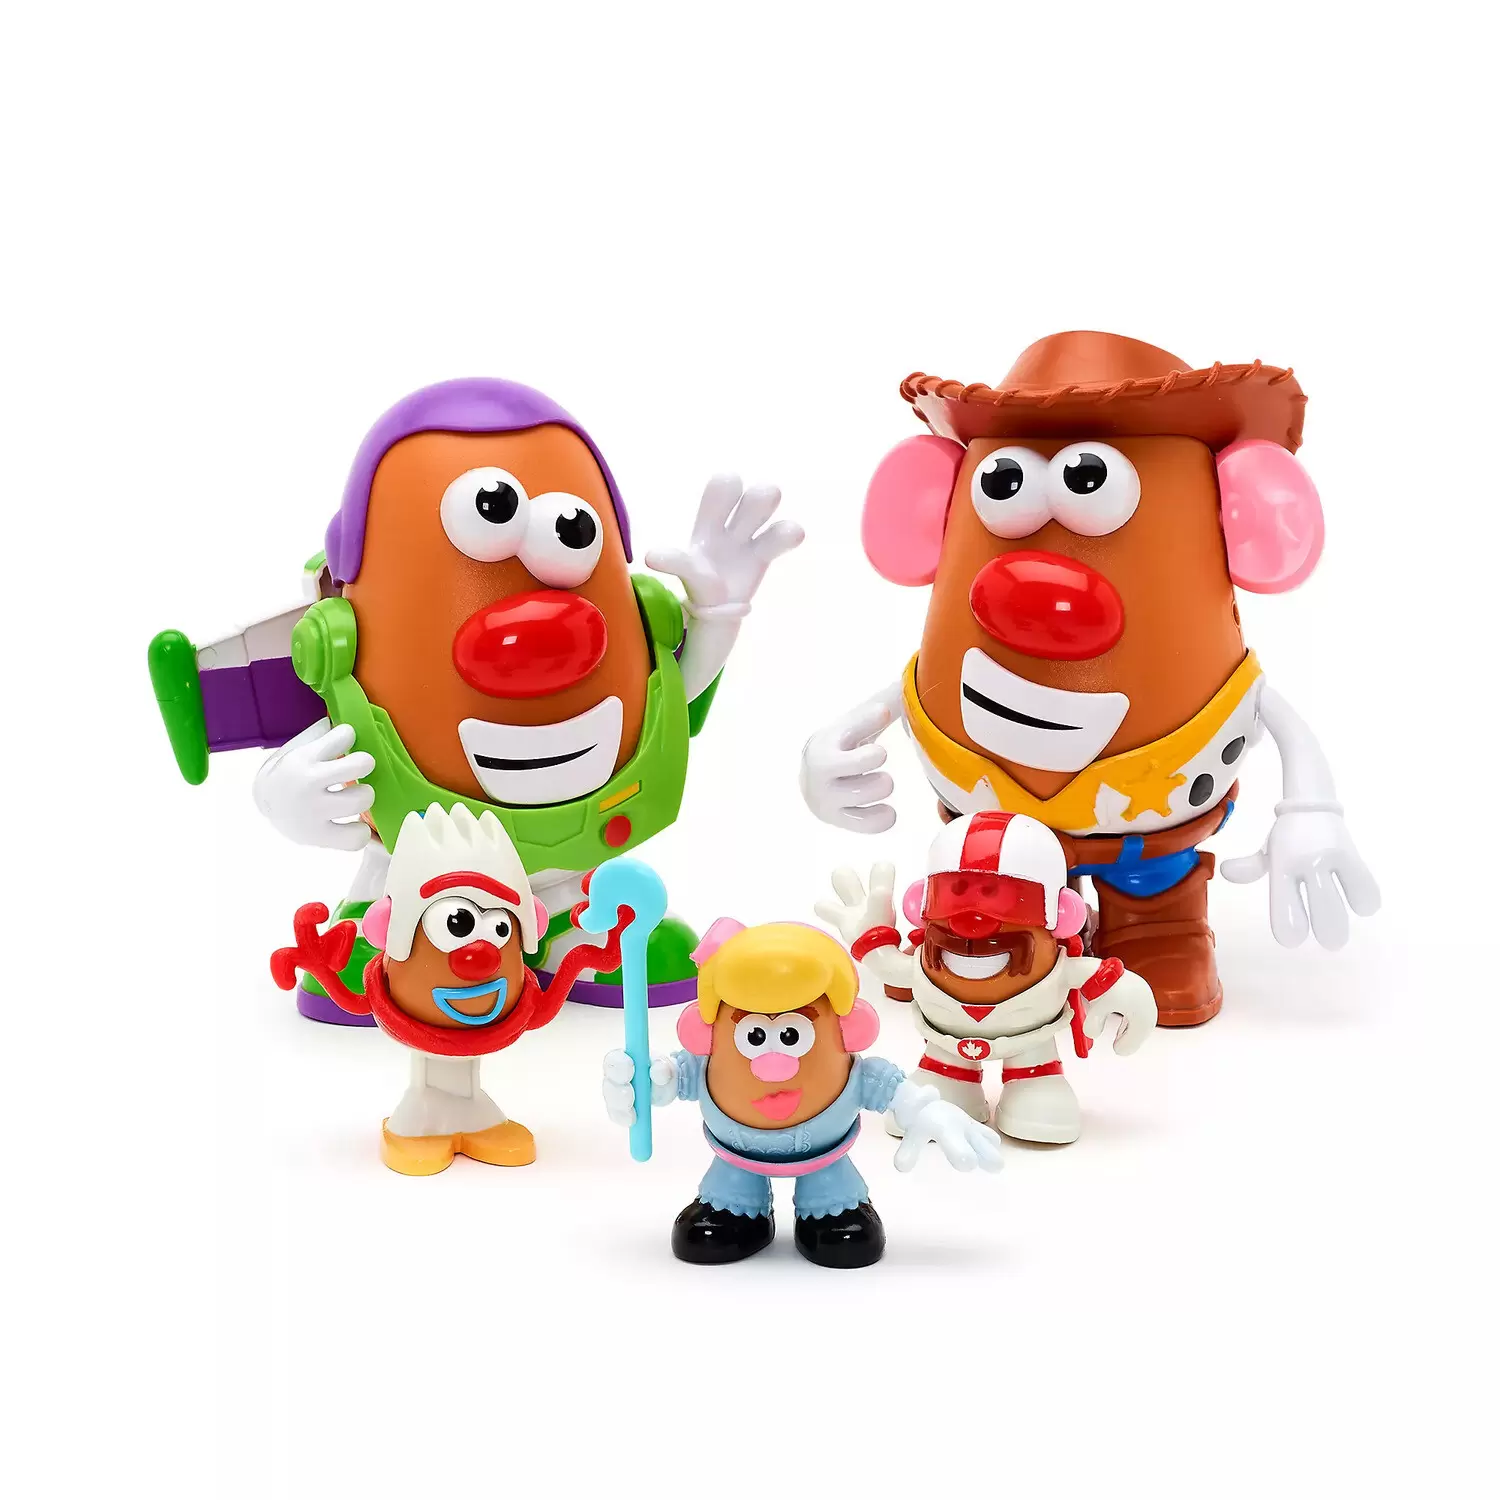 Monsieur Patate - Potato Pals - Toy Story 4